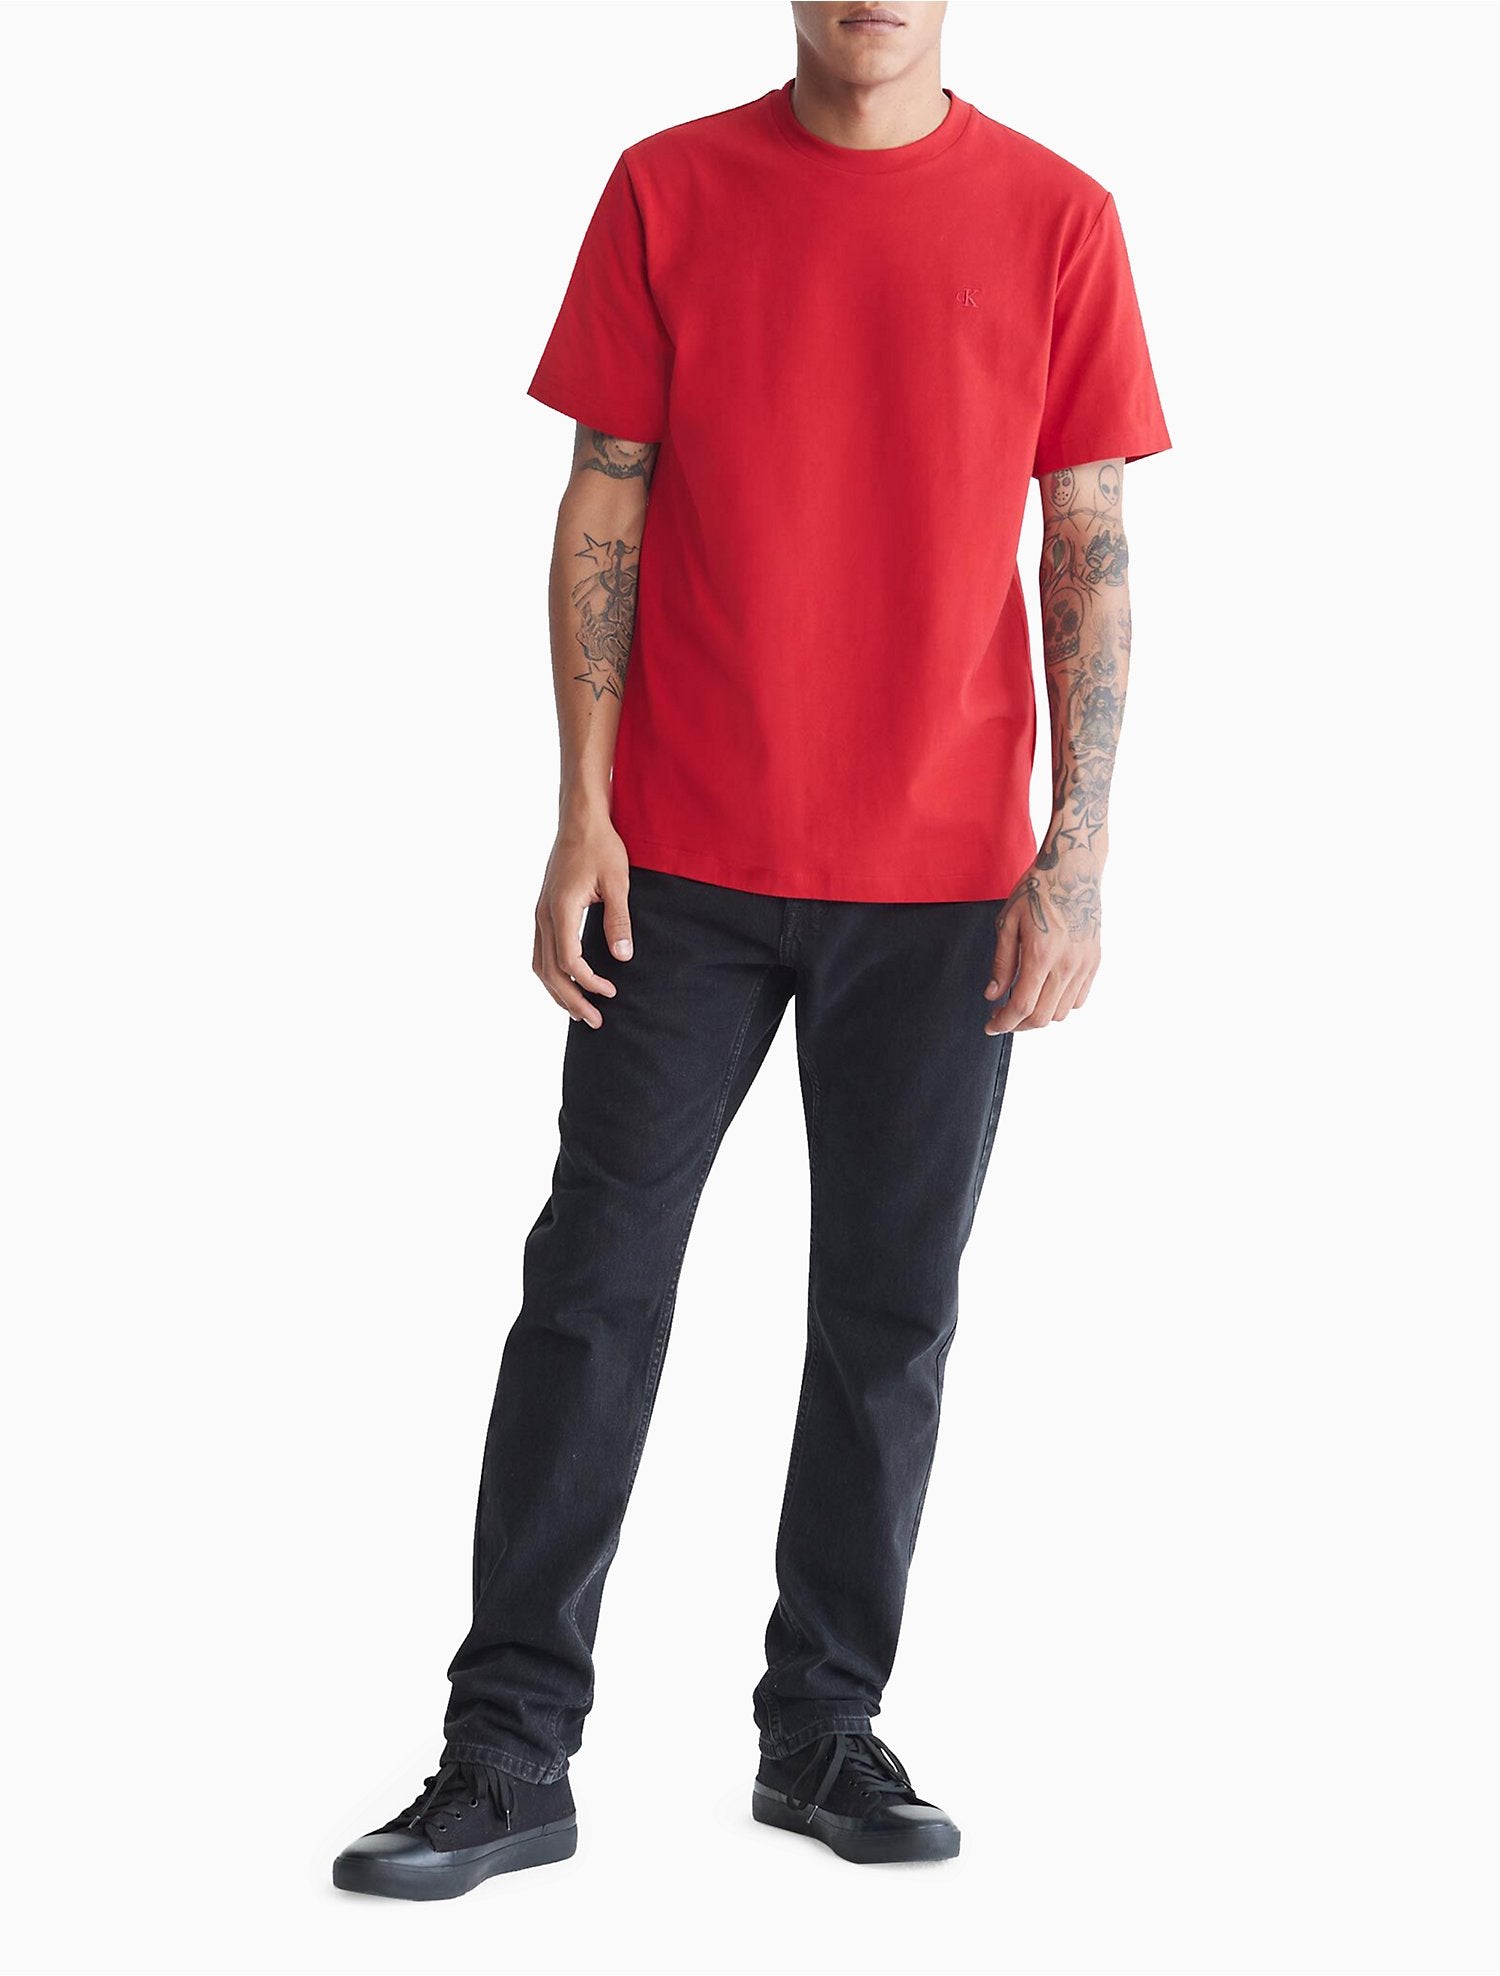 Calvin Klein Smooth Cotton Solid Crewneck T-Shirt - Men